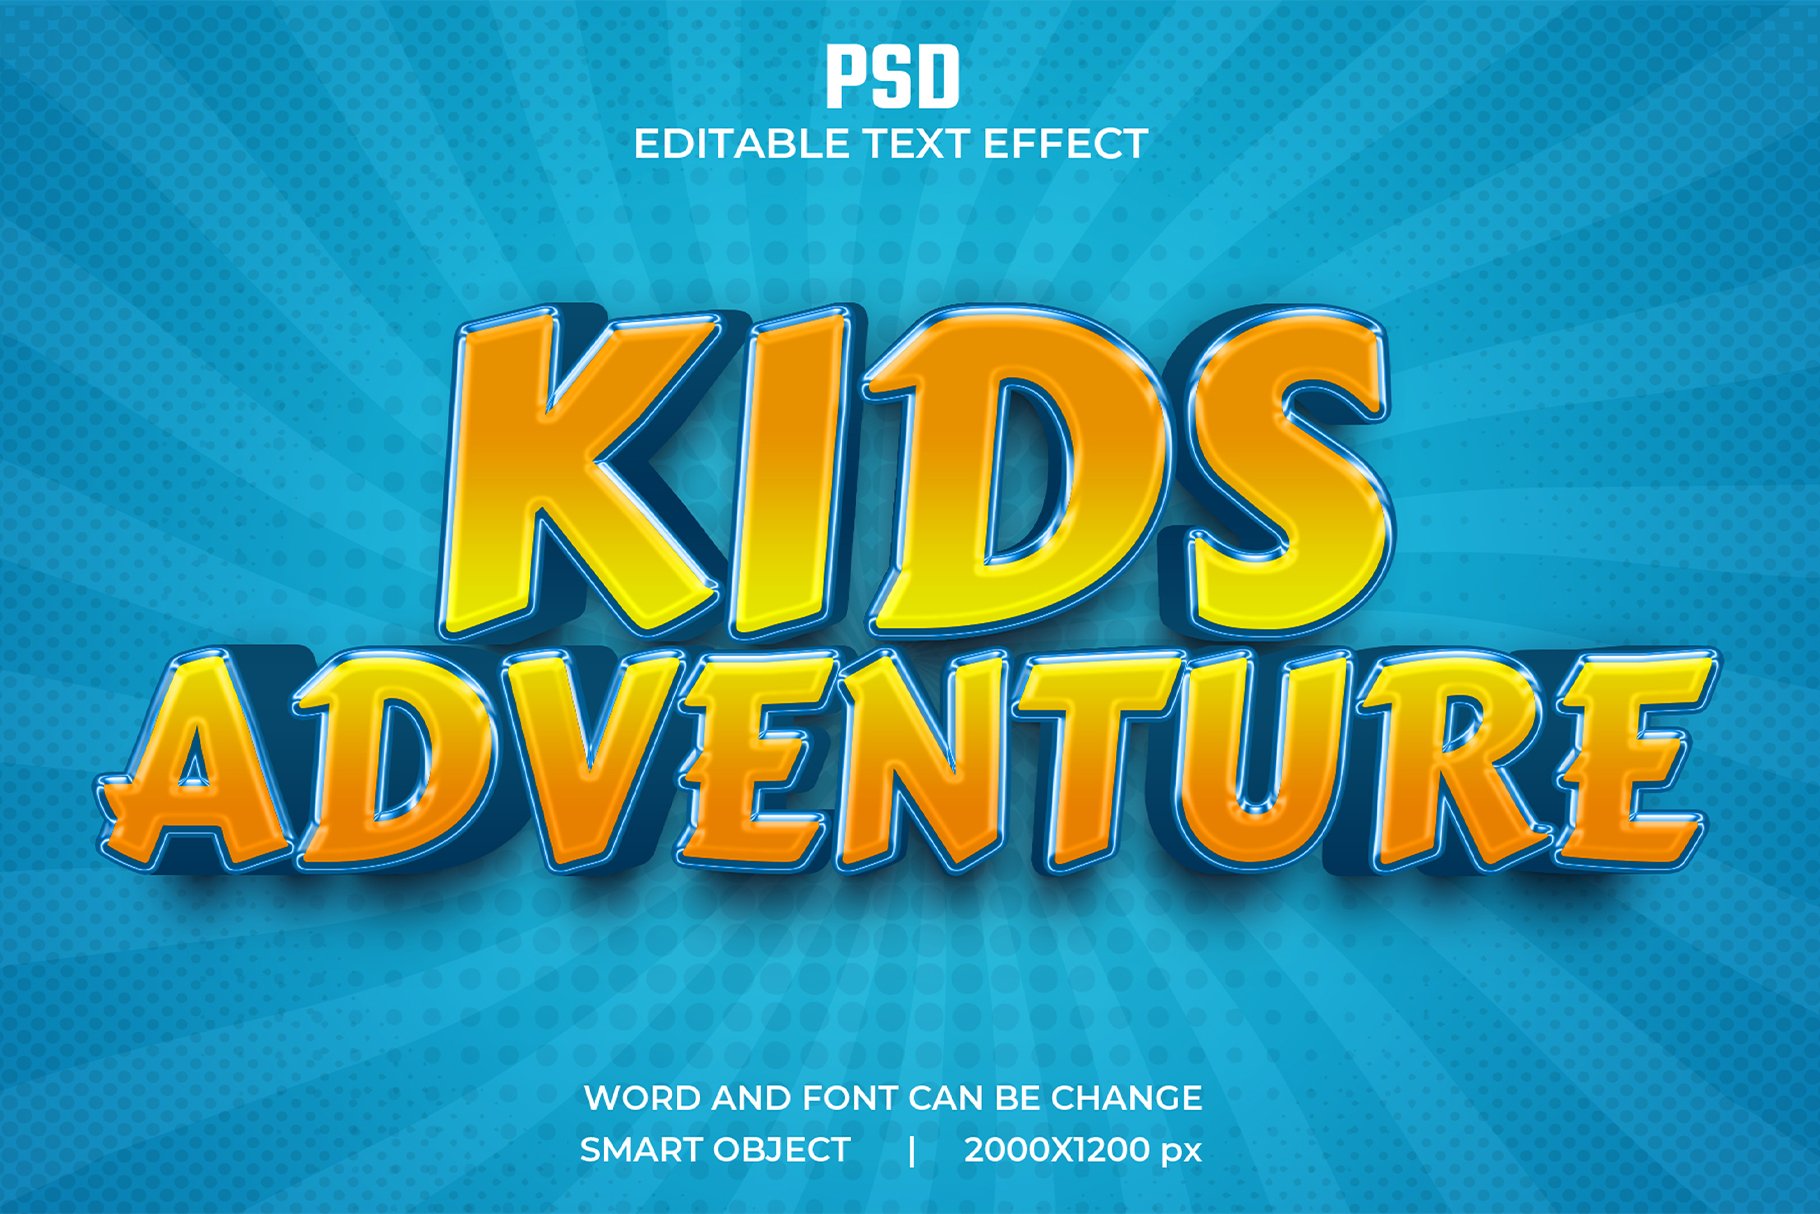 Kids adventure Psd Text Effectcover image.